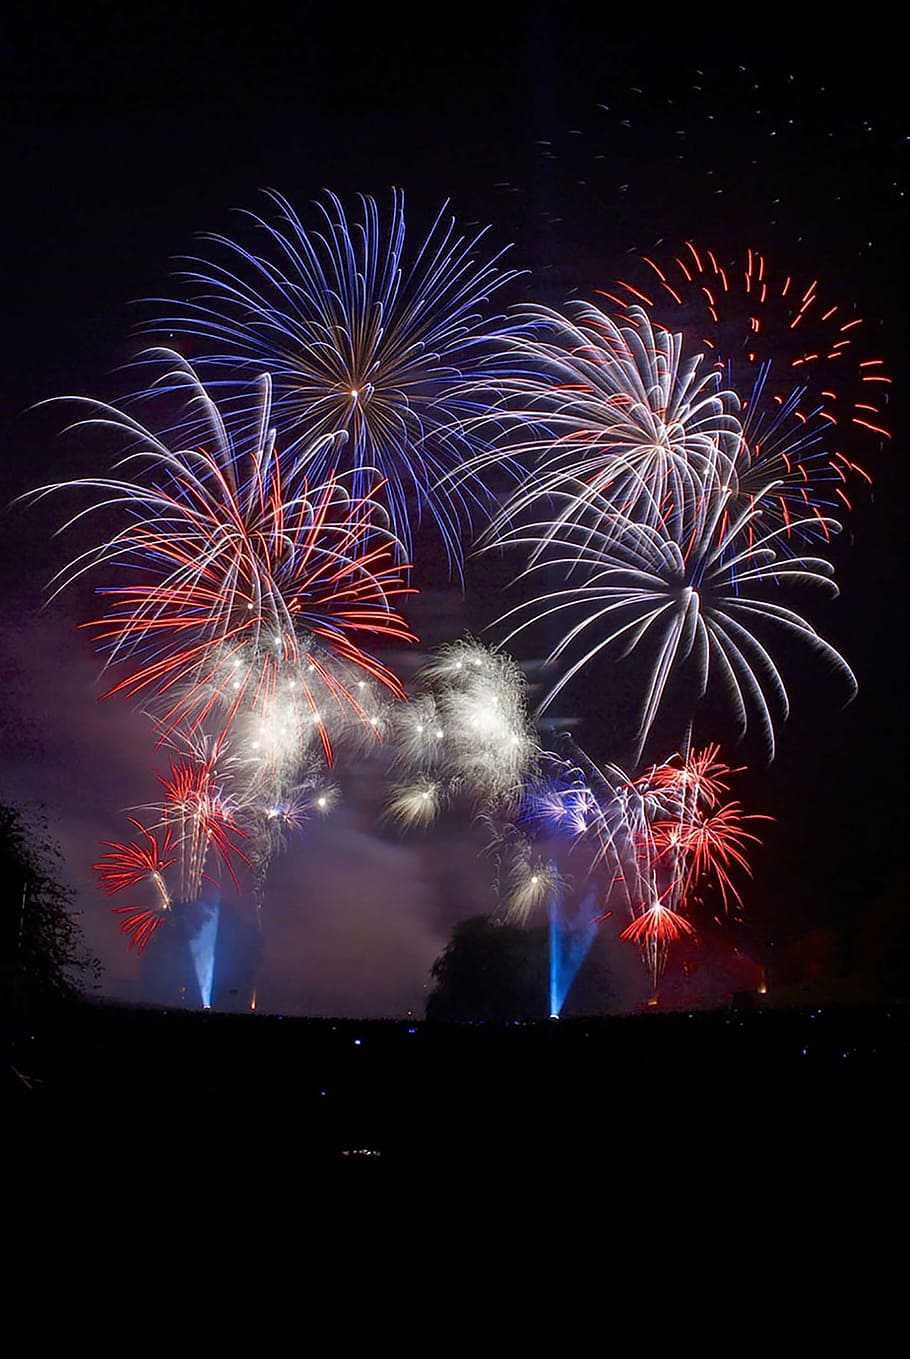 aerial fireworks display during nighttime, bonfire, burst, firework display